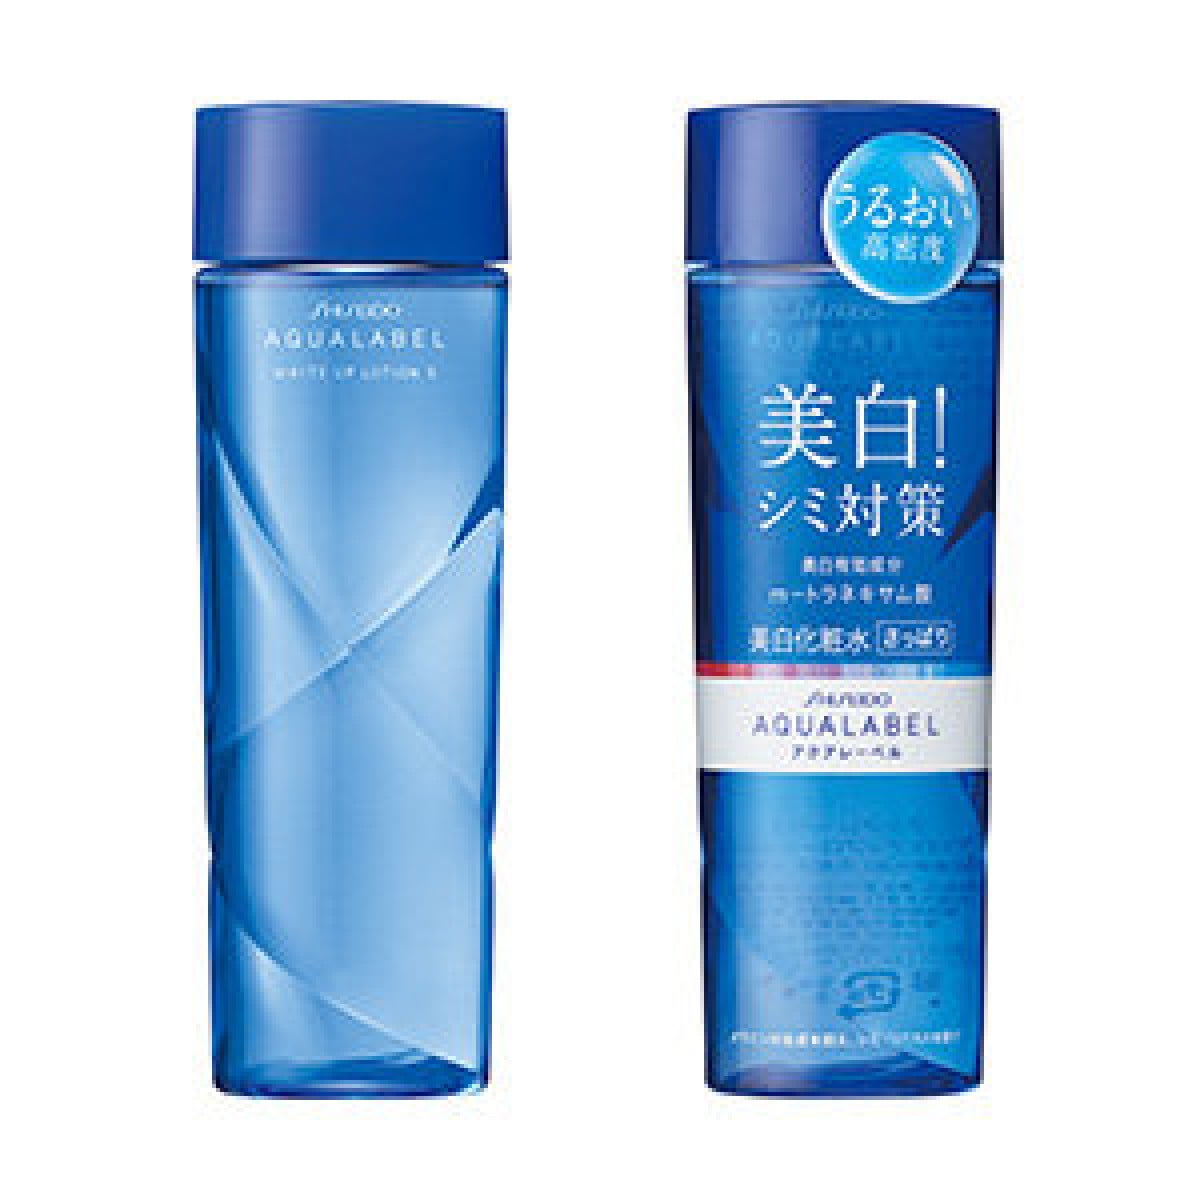 Nước hoa hồng Shiseido aqalable xanh